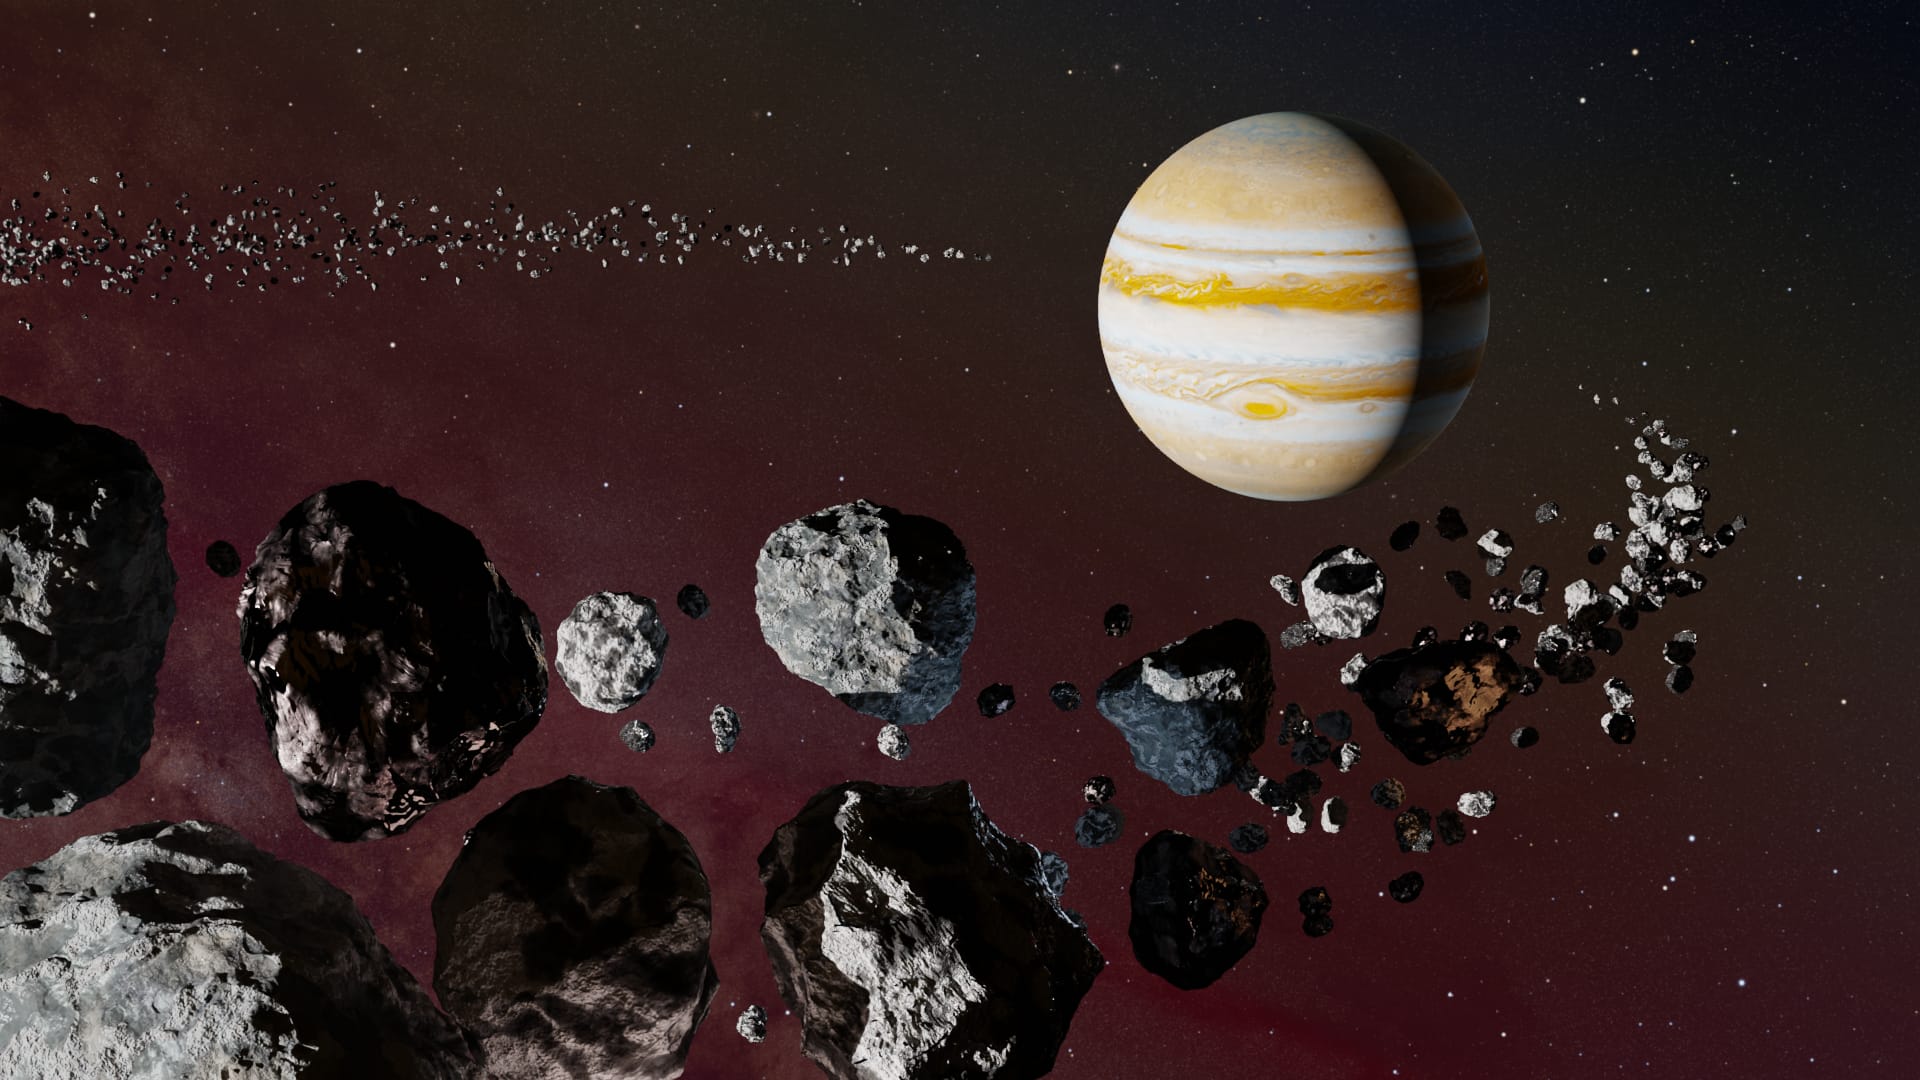 Jupiter's Trojan asteroids